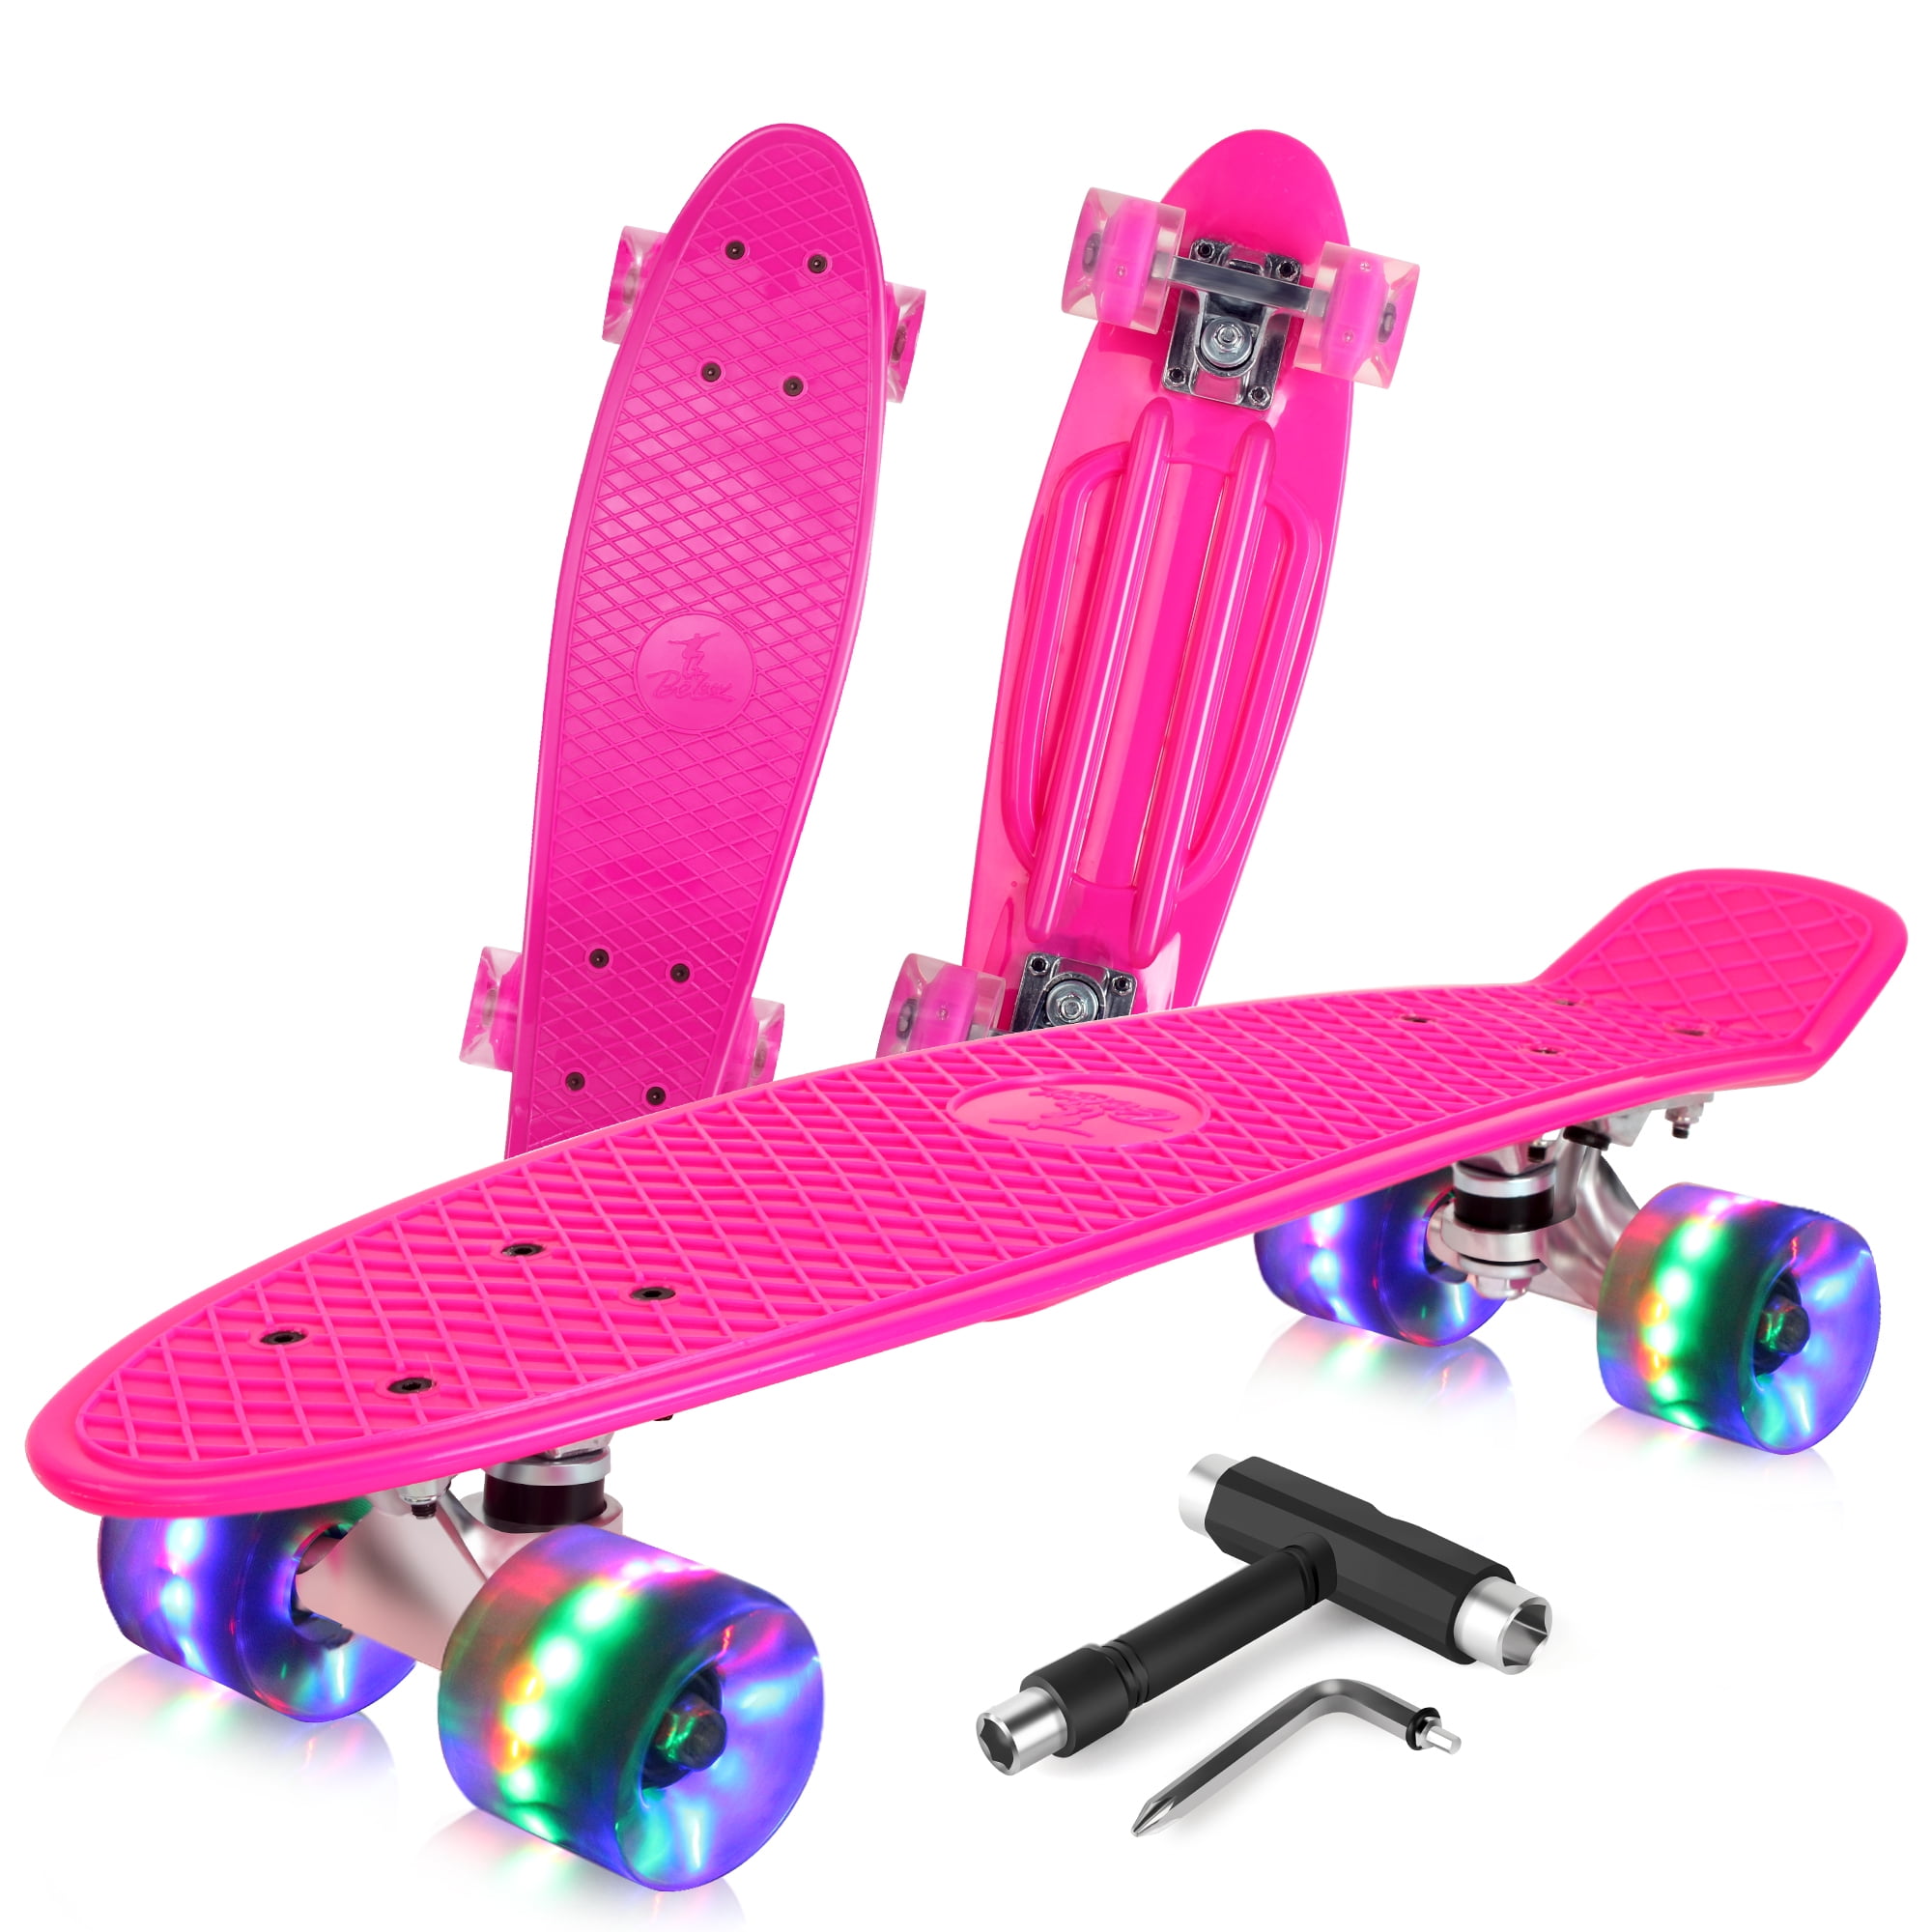 BELEEV Skateboard with Flashing Wheels Complete Cruiser Mini Skateboard for Kids Teens Adults & Beginners, All-in-One Skate T-Tool Pink